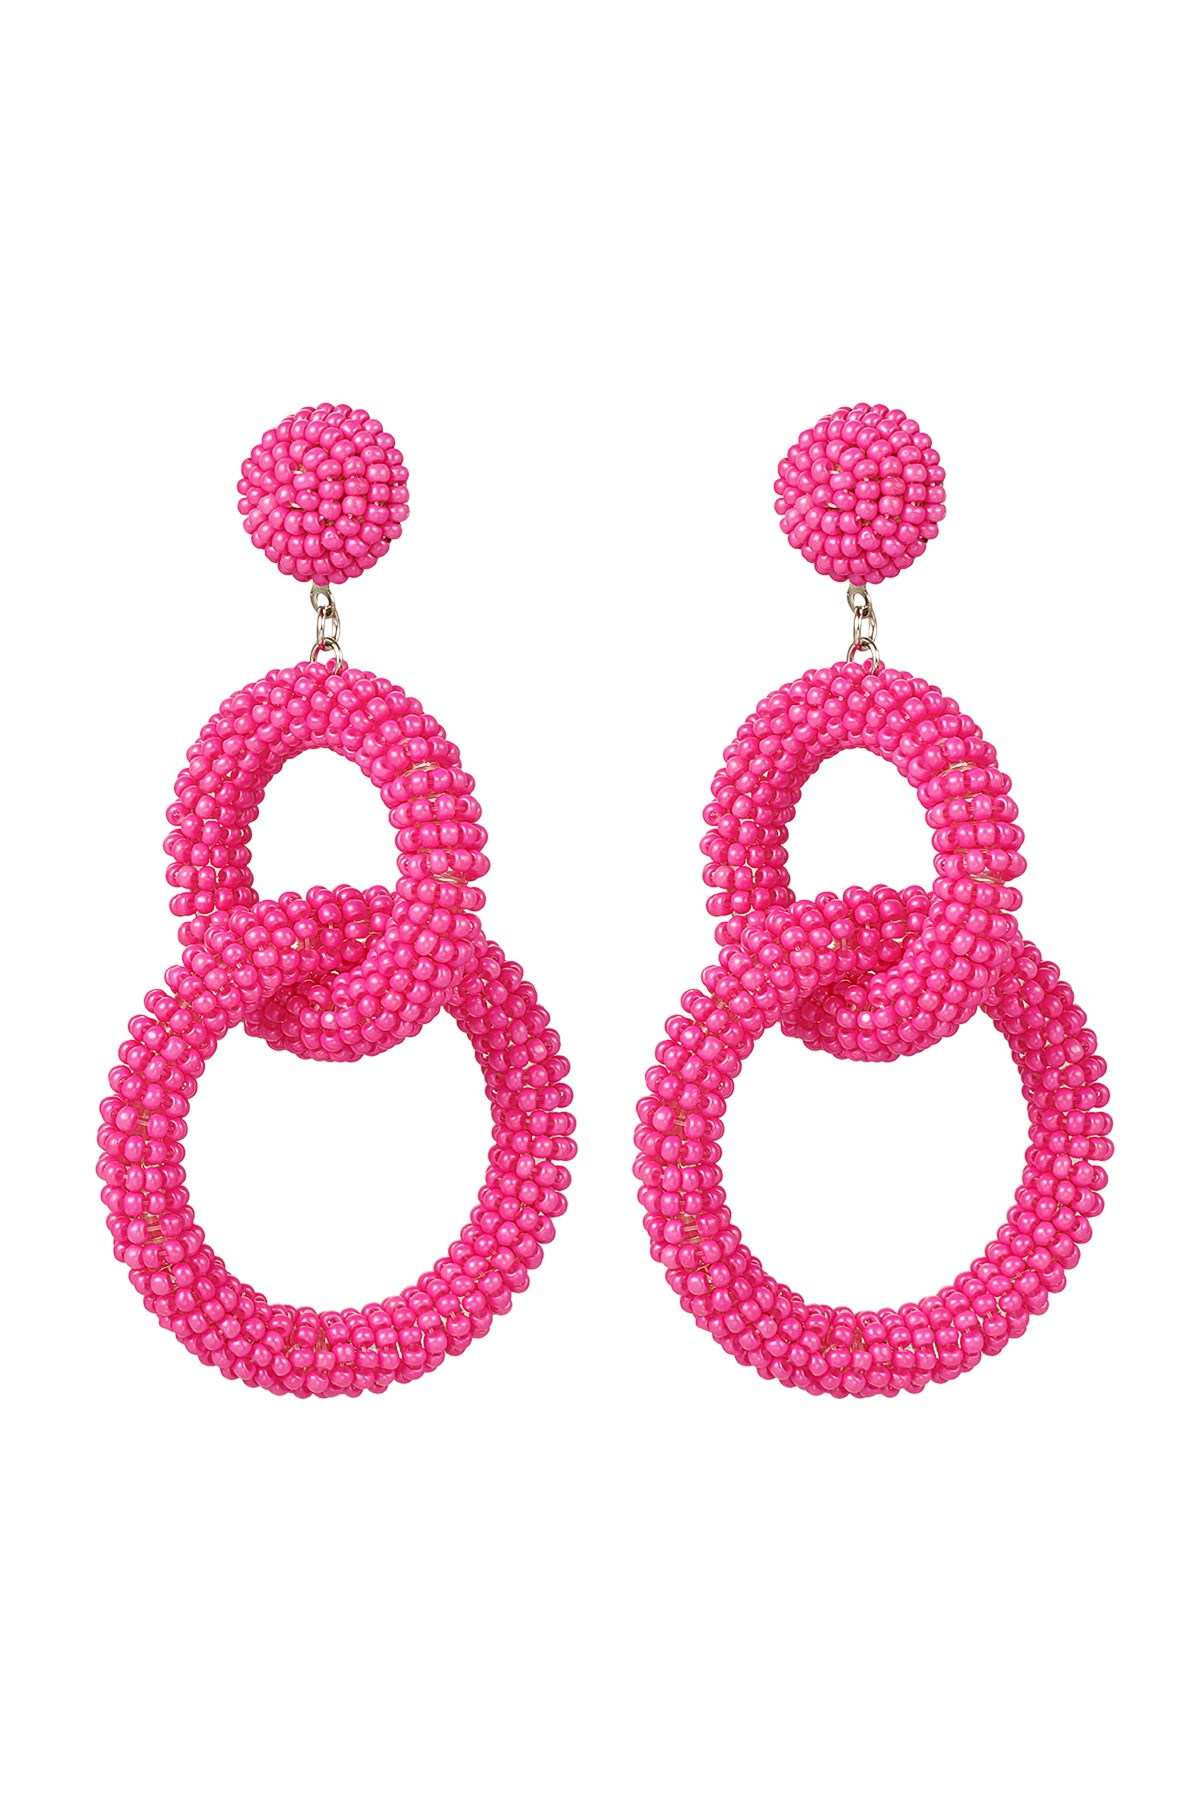 Beaded earrings crocheted - fuchsia 